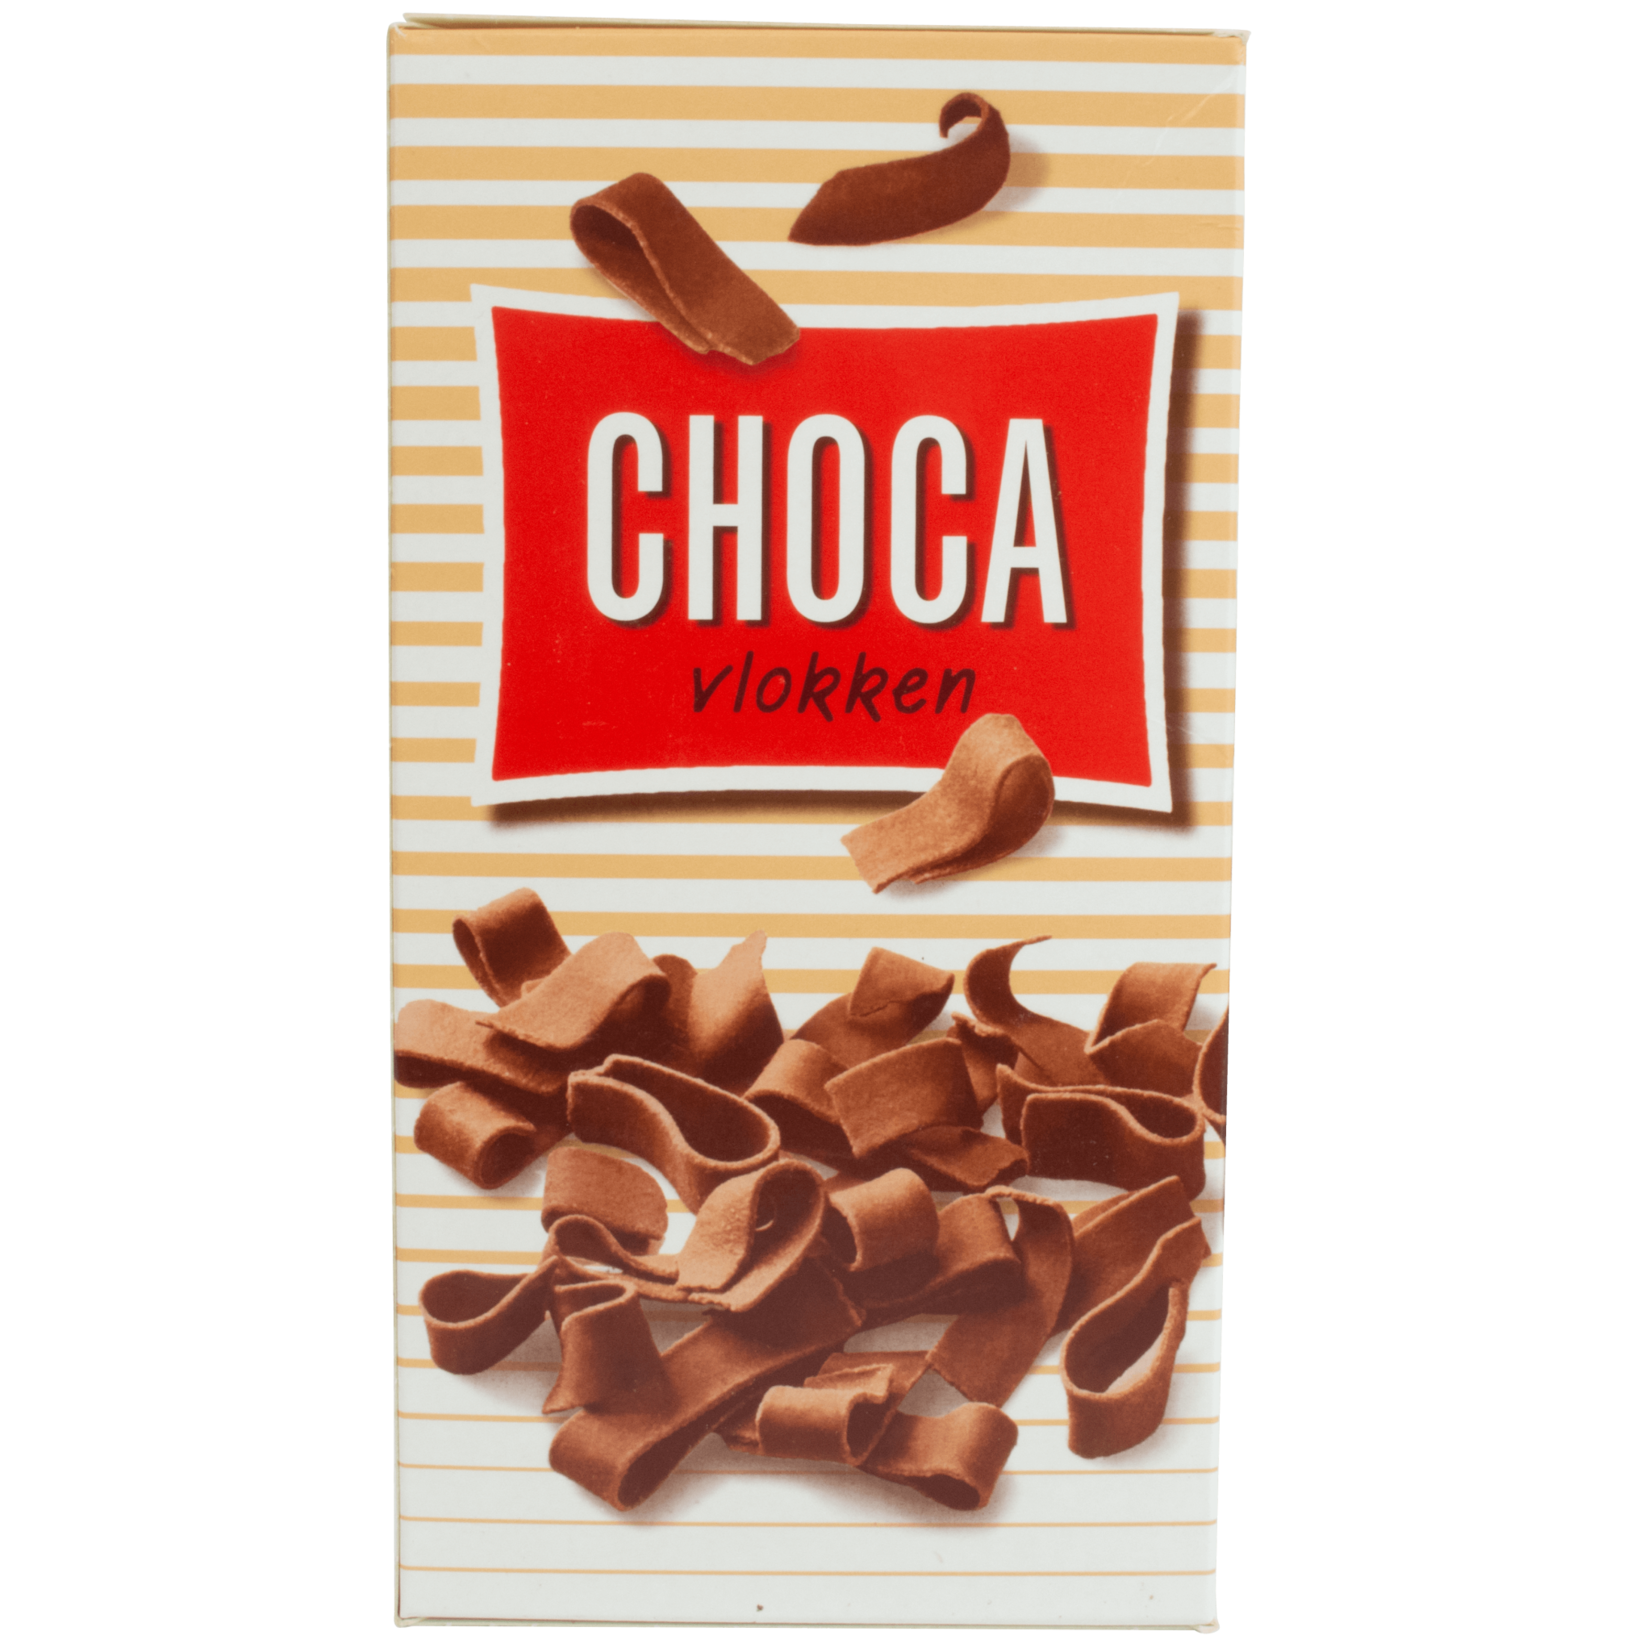 Choca Choca Vlokken Chocolate Flakes 300g